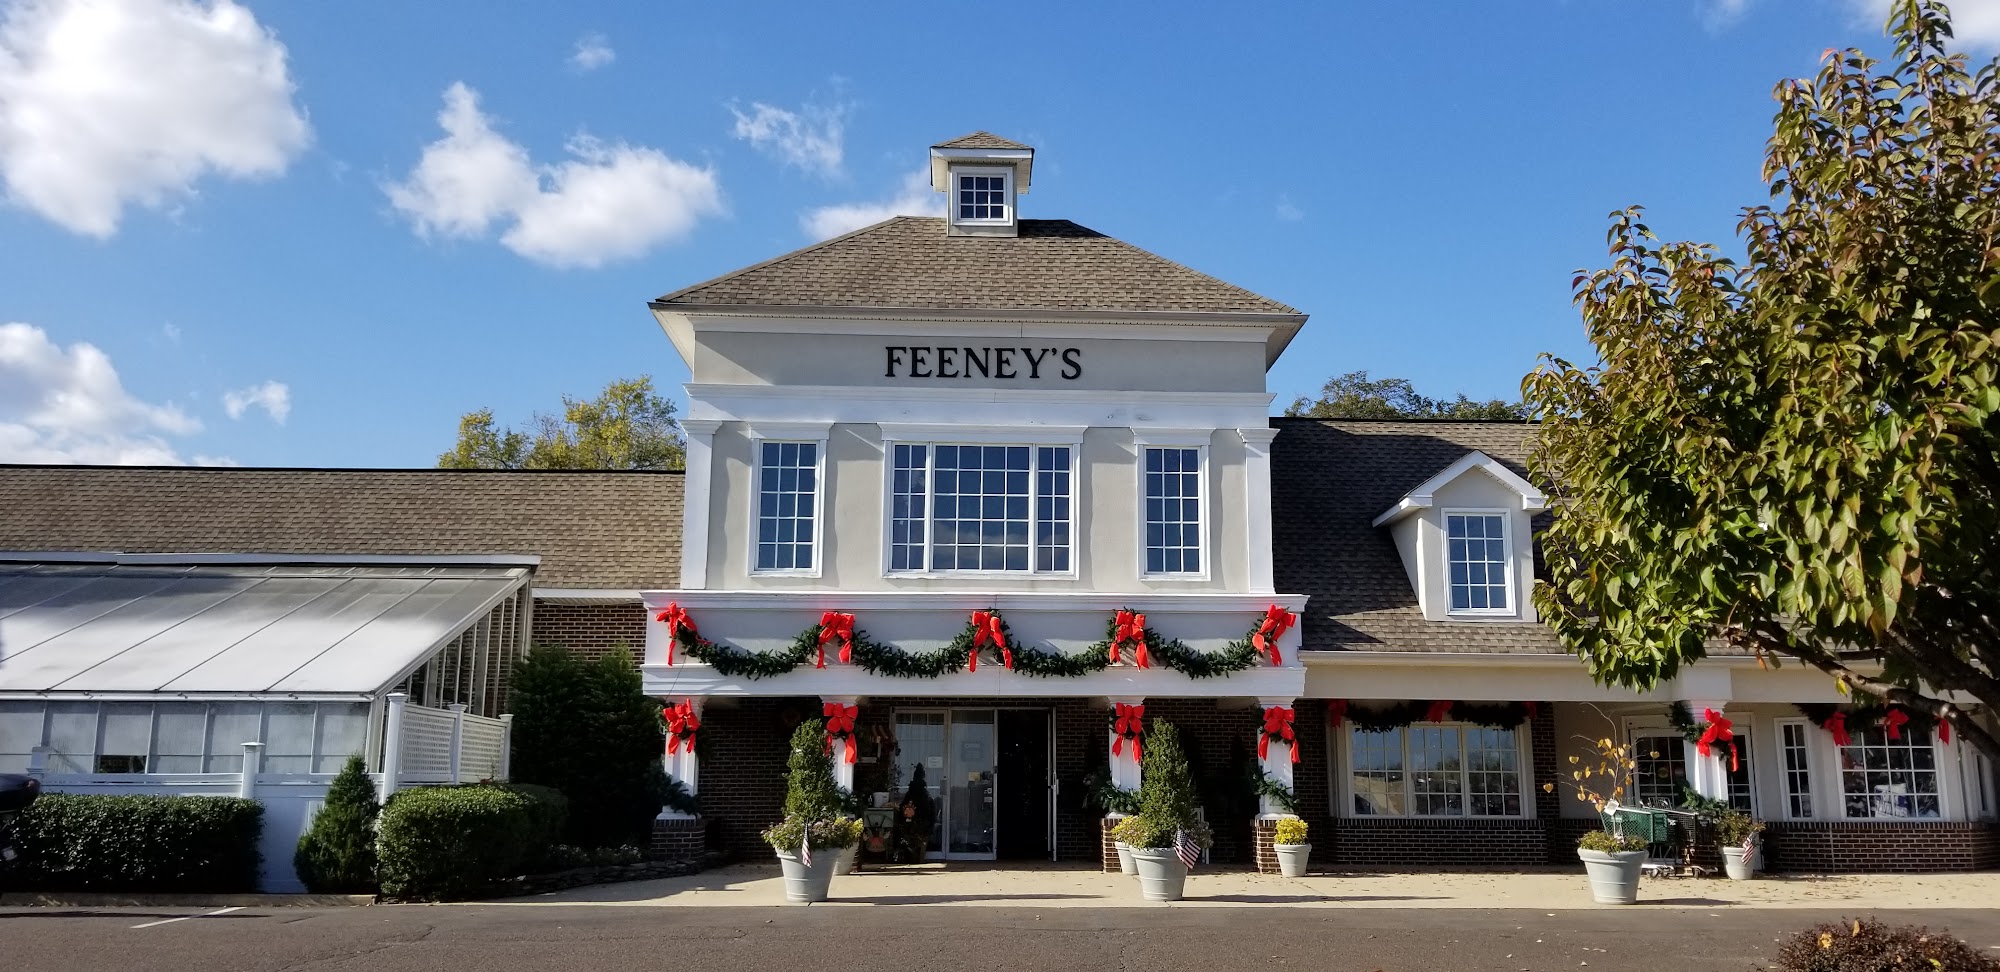 Feeney's